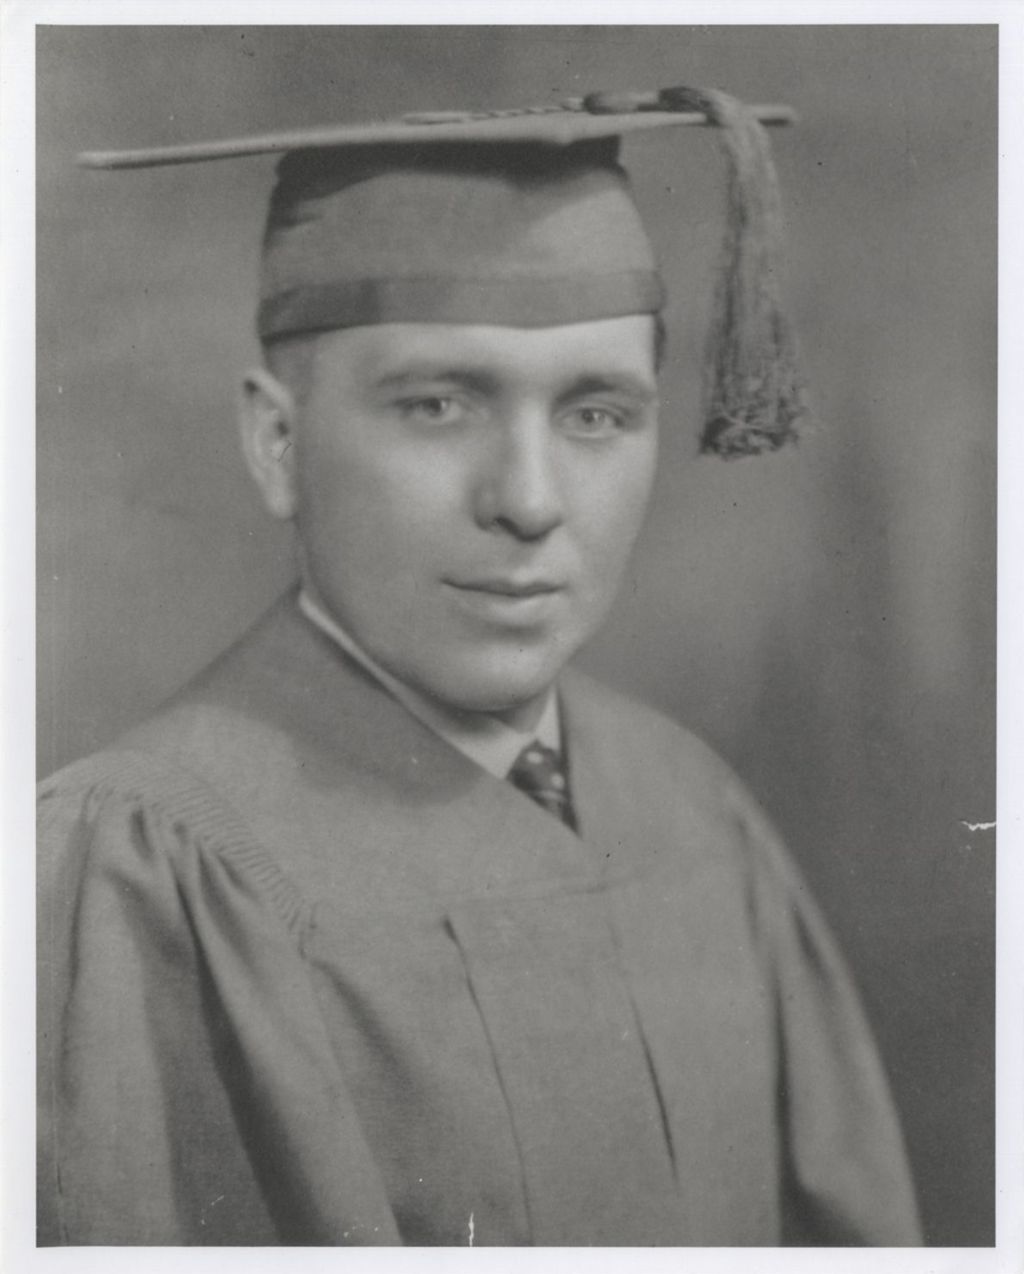 Richard J. Daley's Law School graduation portrait